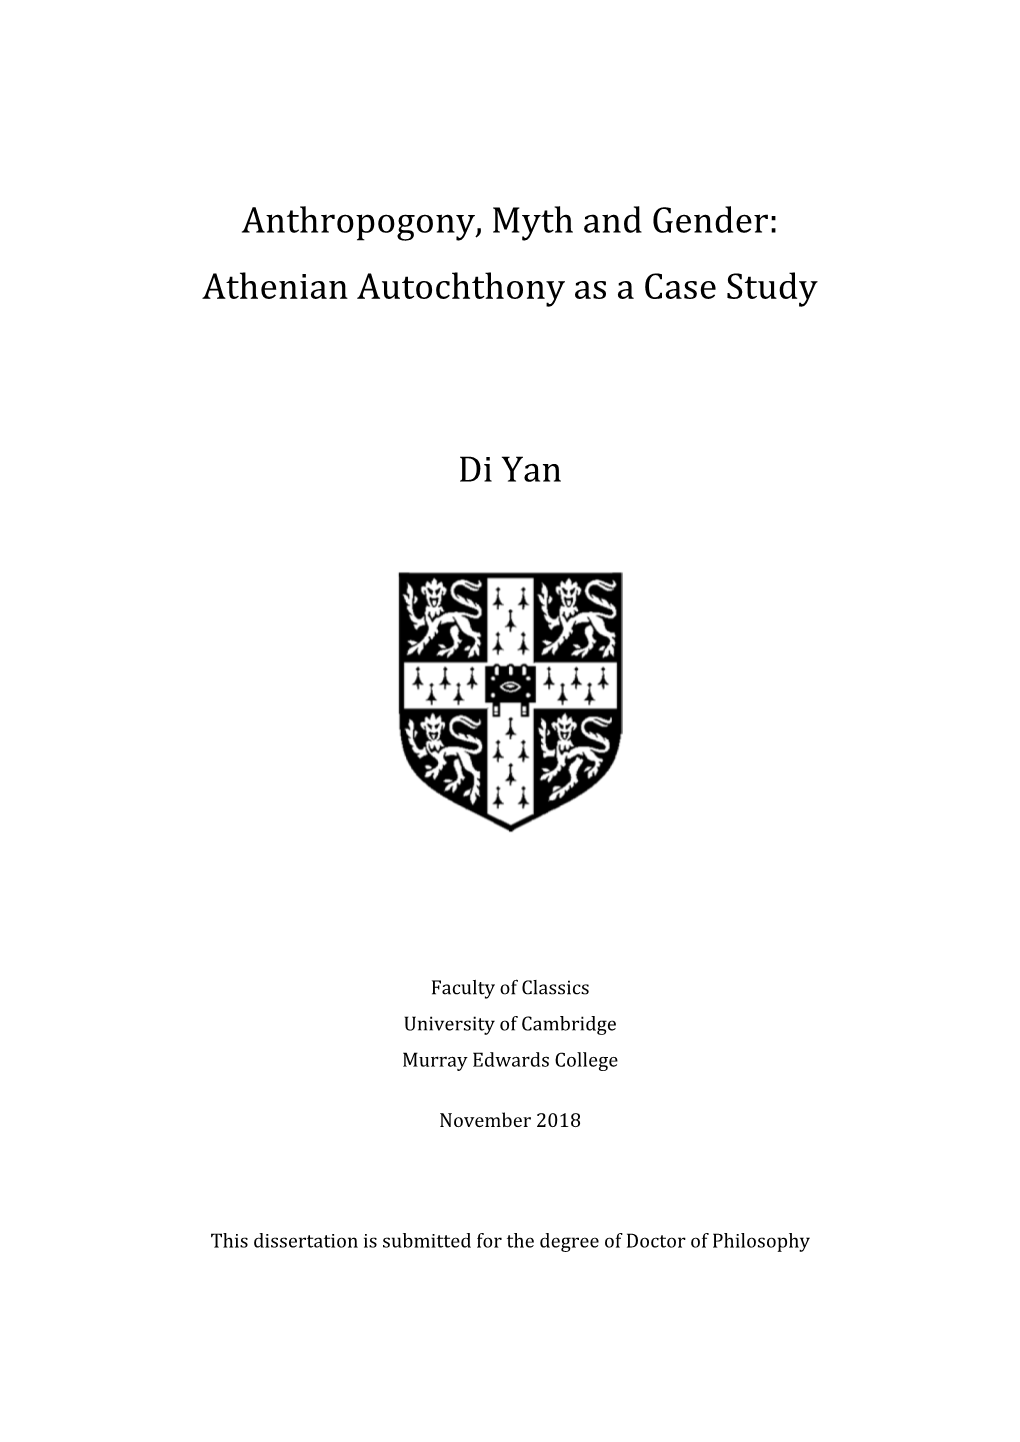 Anthropogony, Myth and Gender: Athenian Autochthony As a Case Study